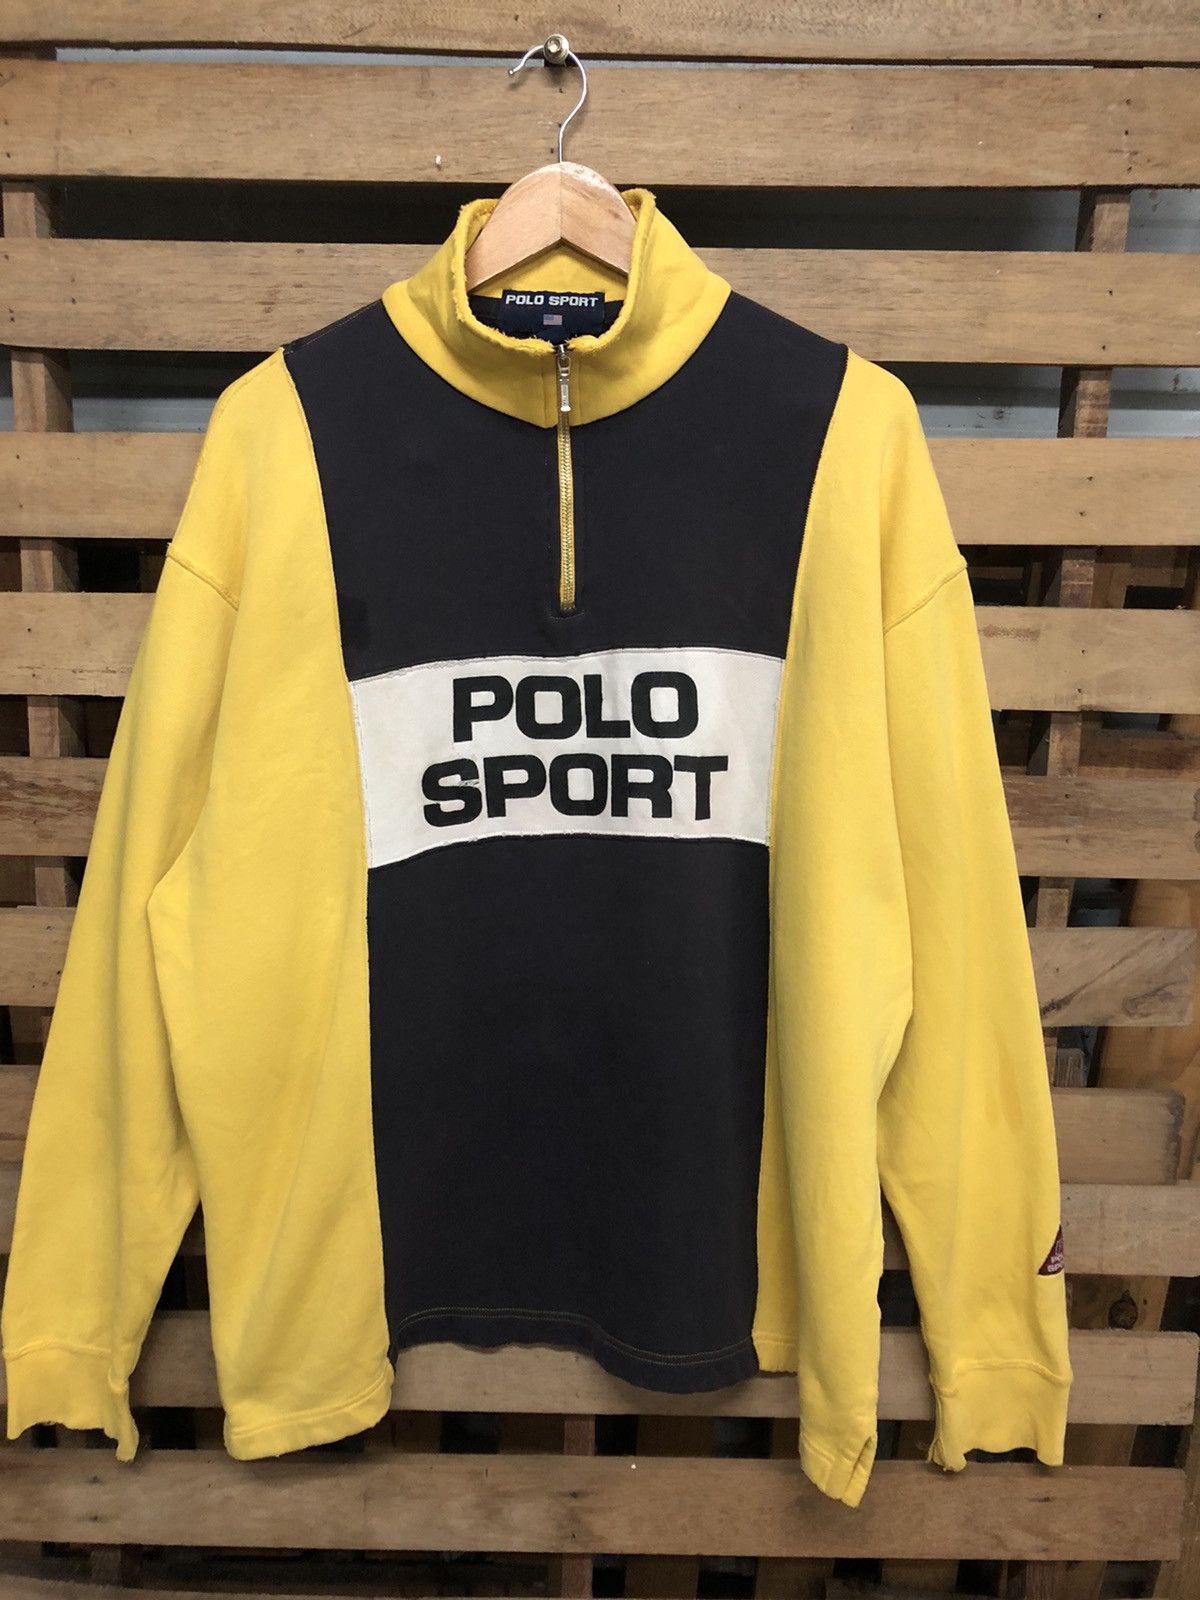 Polo Ralph Lauren - Rare Vintage 90s Polo Sport Spellout Half Zipper Sweetshirt - 1